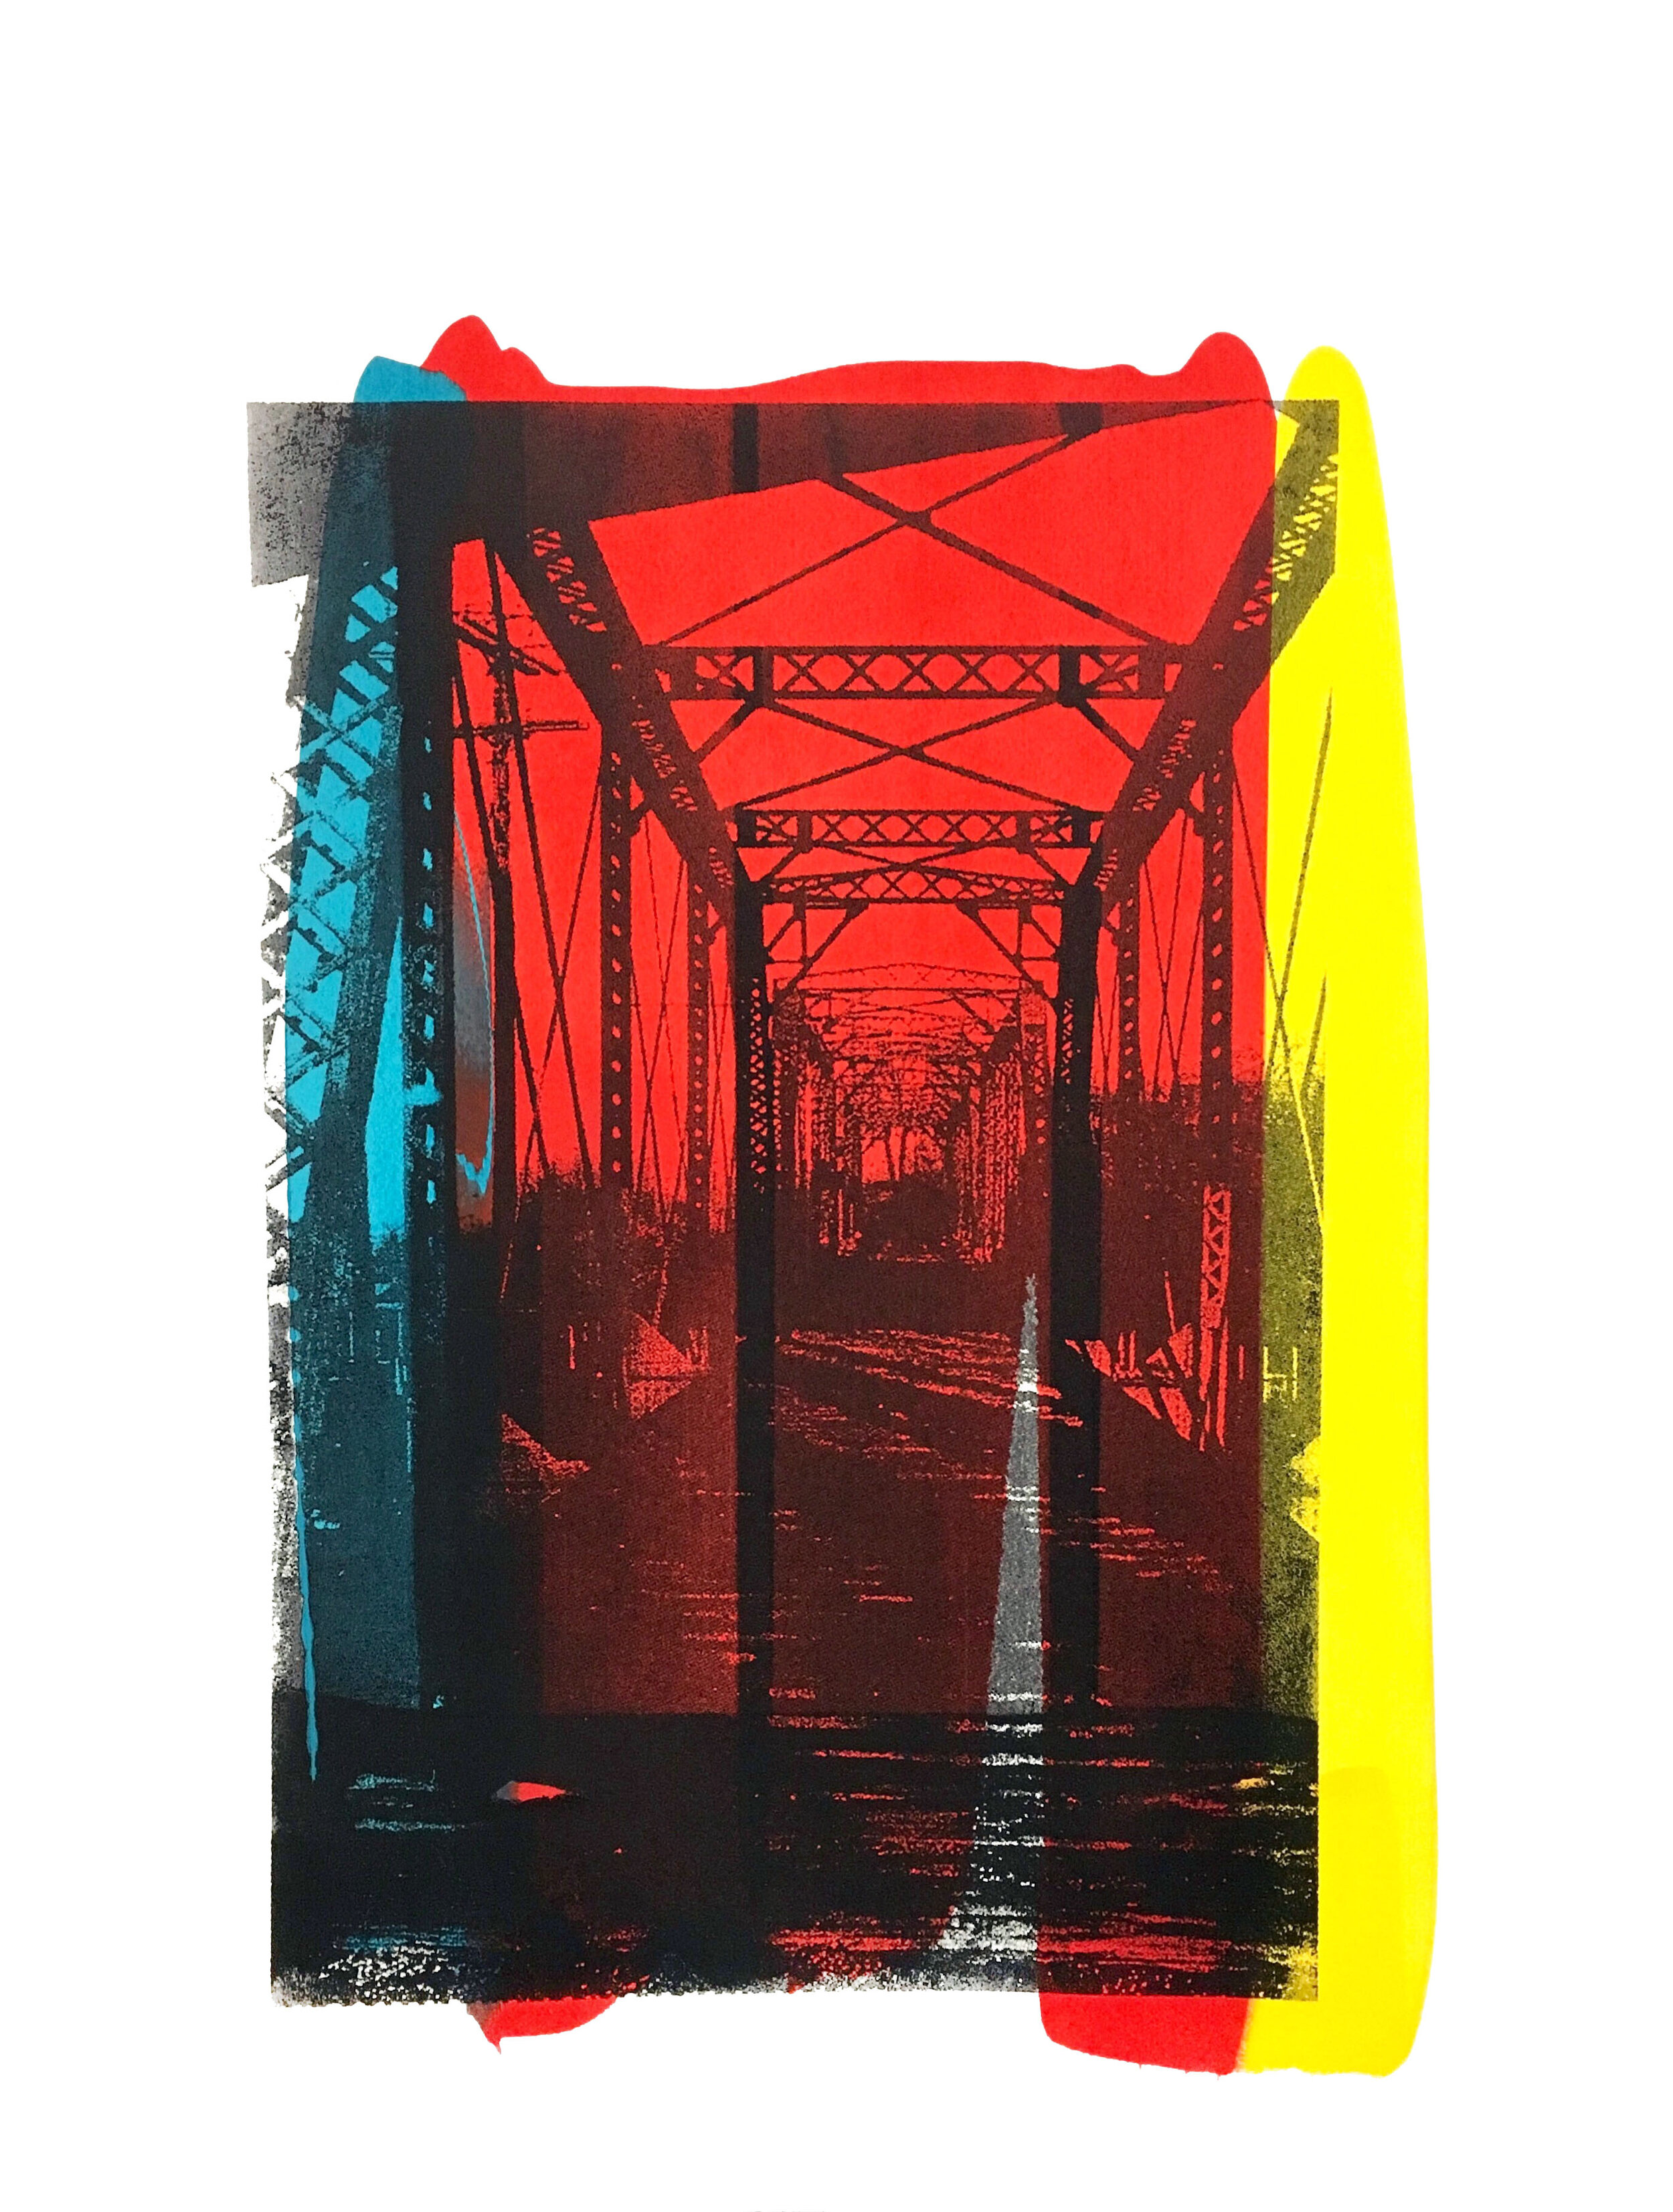  Lloyd Benjamin   KC Bridge,   2019 Acrylic paint and screen print on BFK Rives paper 30 x 22.25 in. YIMBY price $1,350 